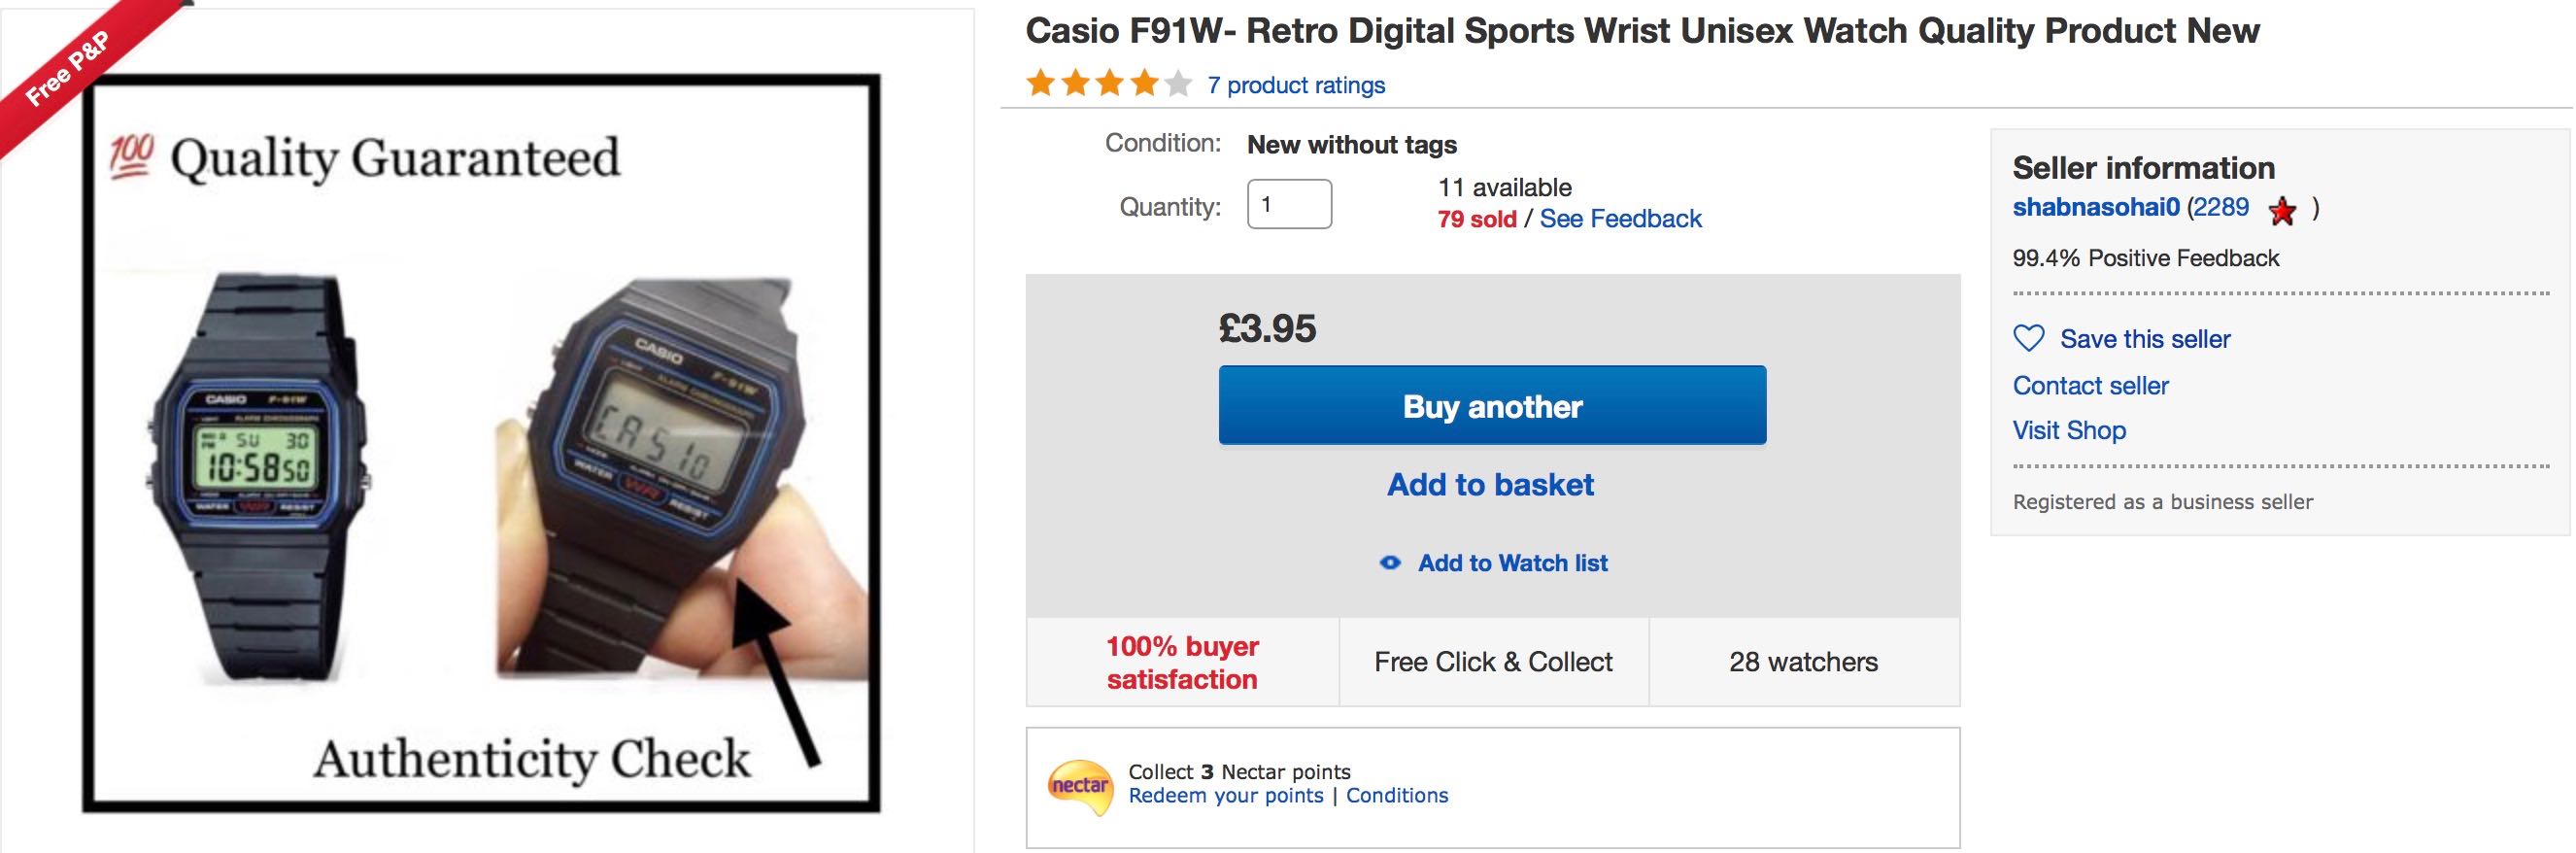 eBay auction for a fake Casio F91-W